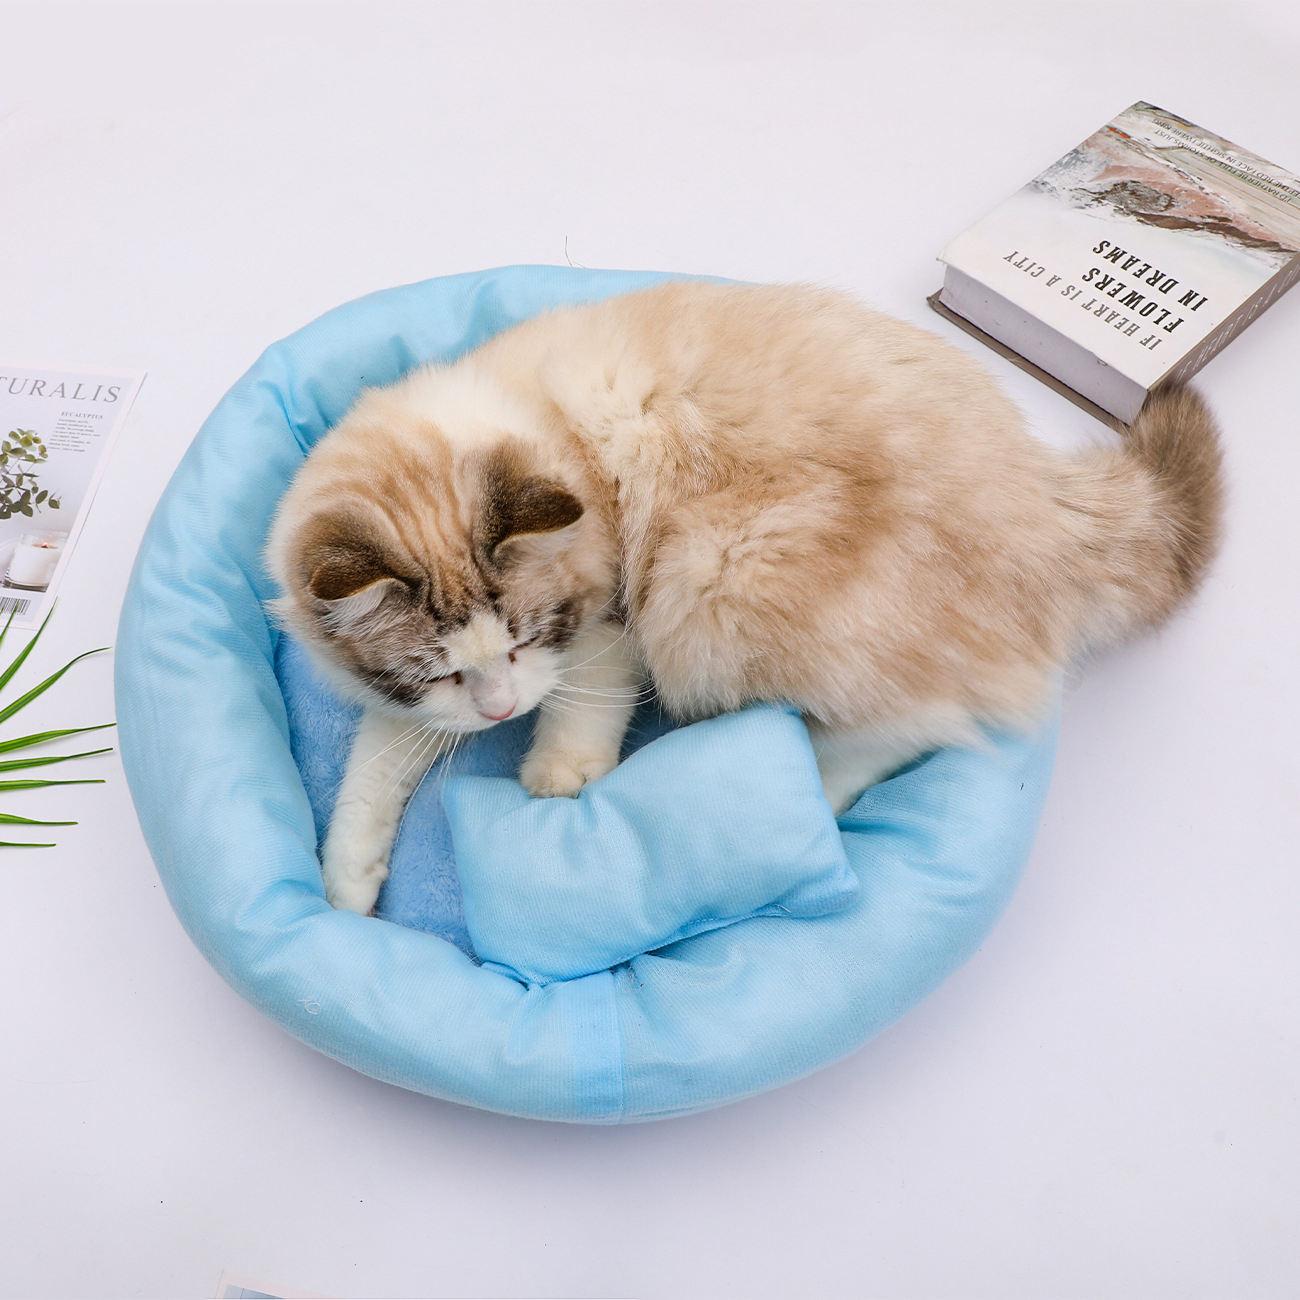 Simple And Comfortable Non-slip Bottom Round Sleeping Plush Pet Cat Bed Sofa